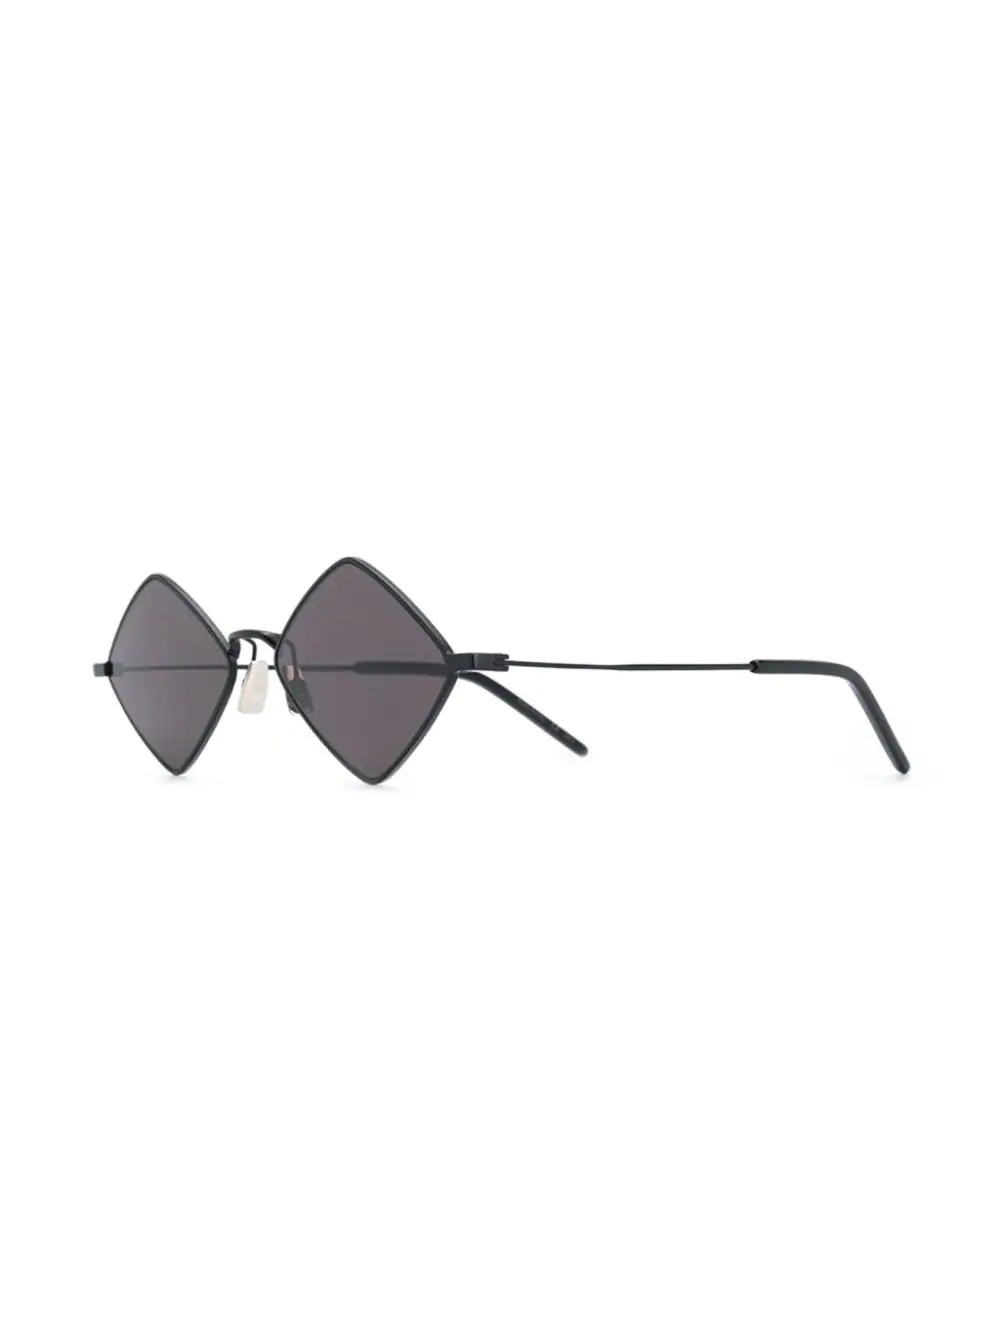 diamond shape sunglasses - 2